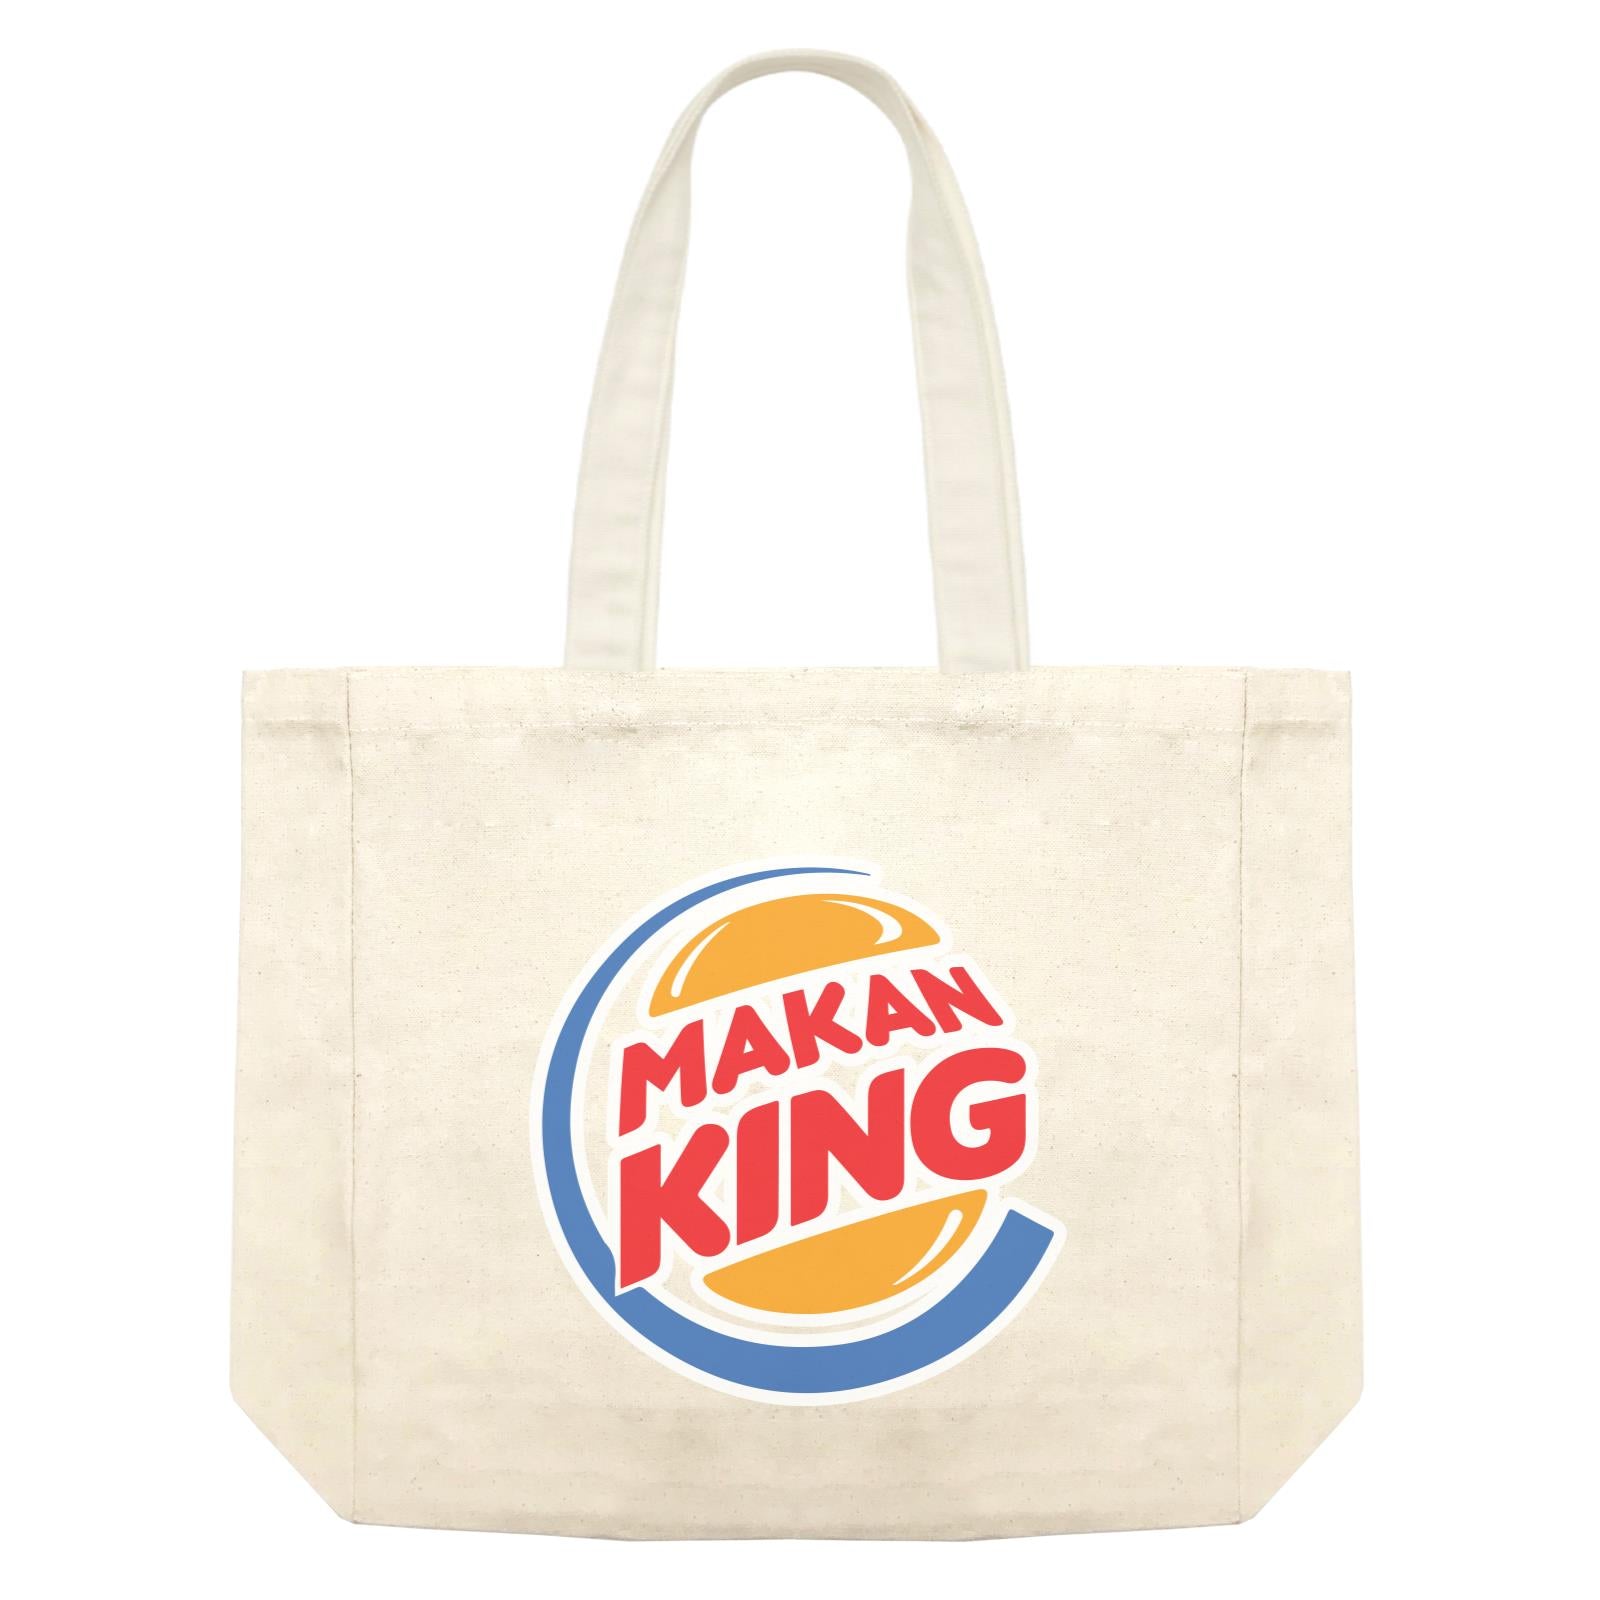 Slang Statement Makan King Accessories Shopping Bag